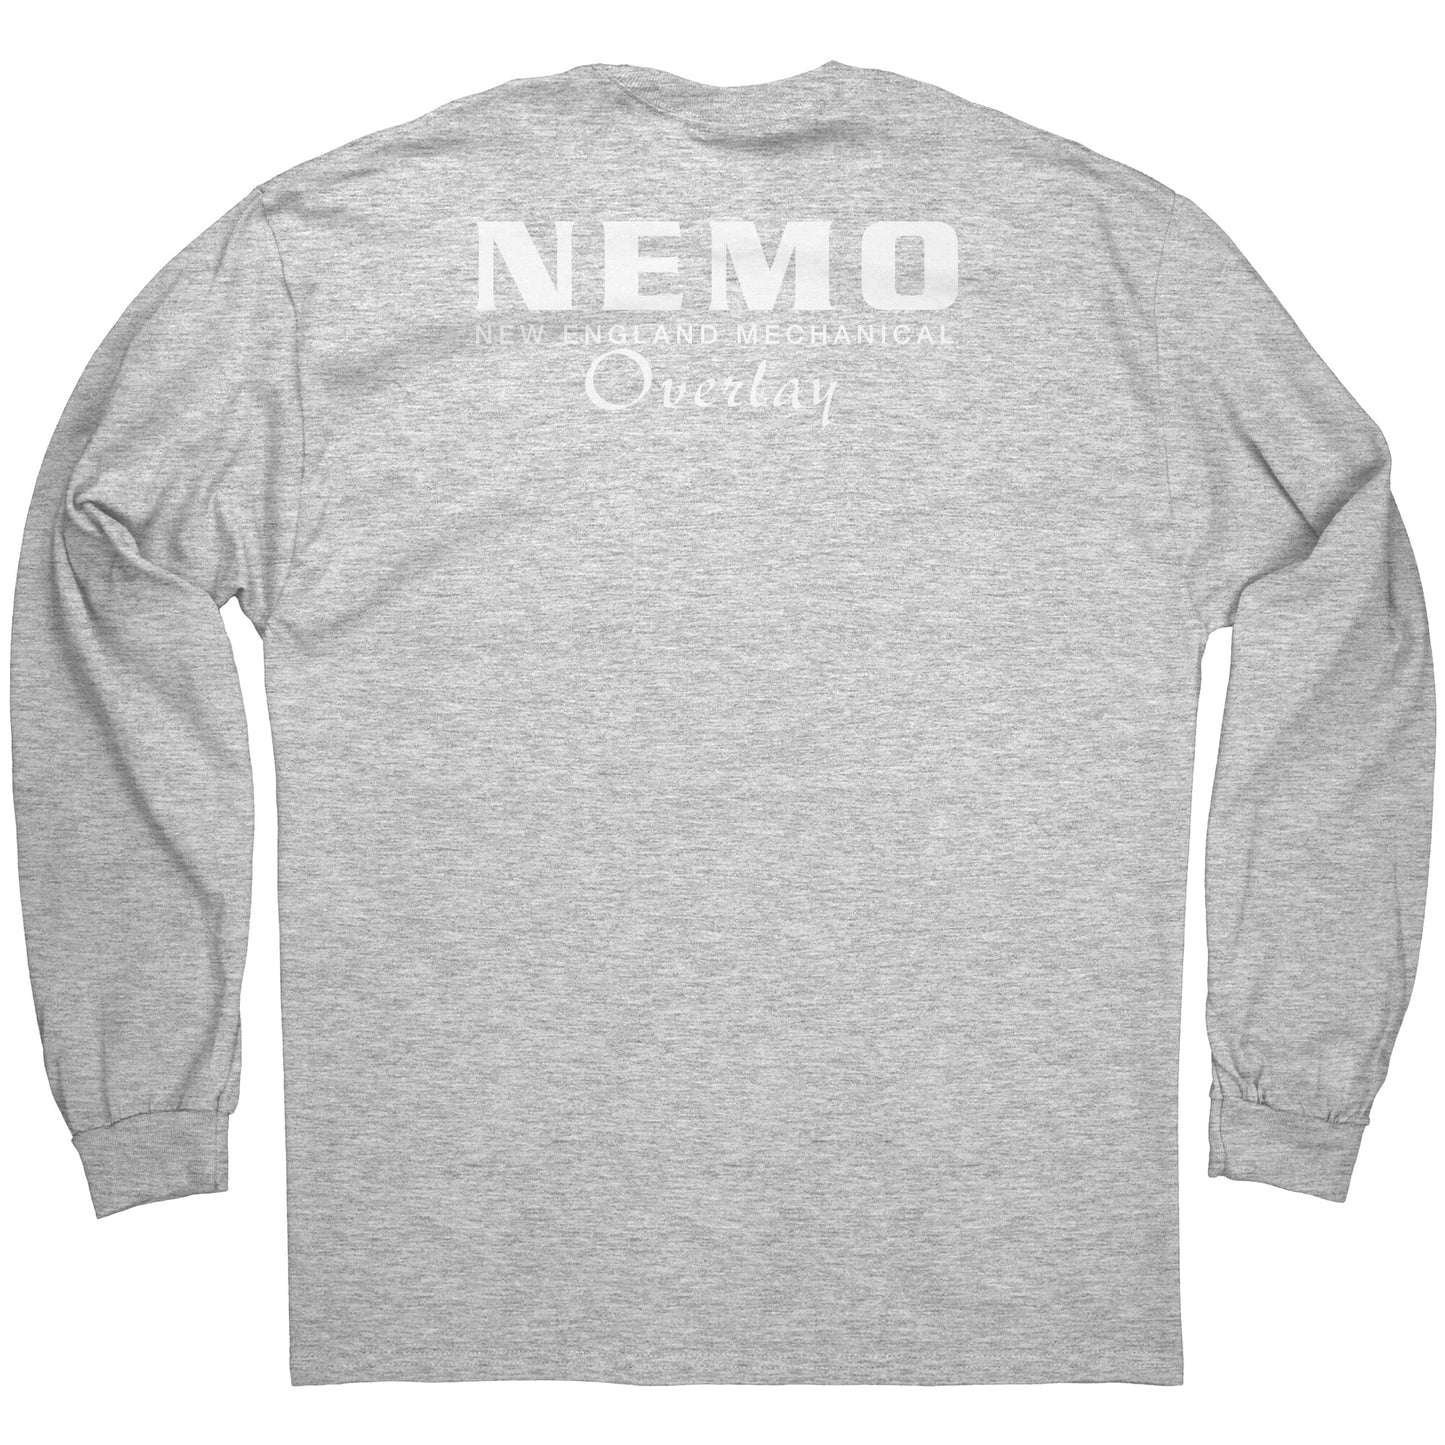 NEMO Long Sleeve Shirt